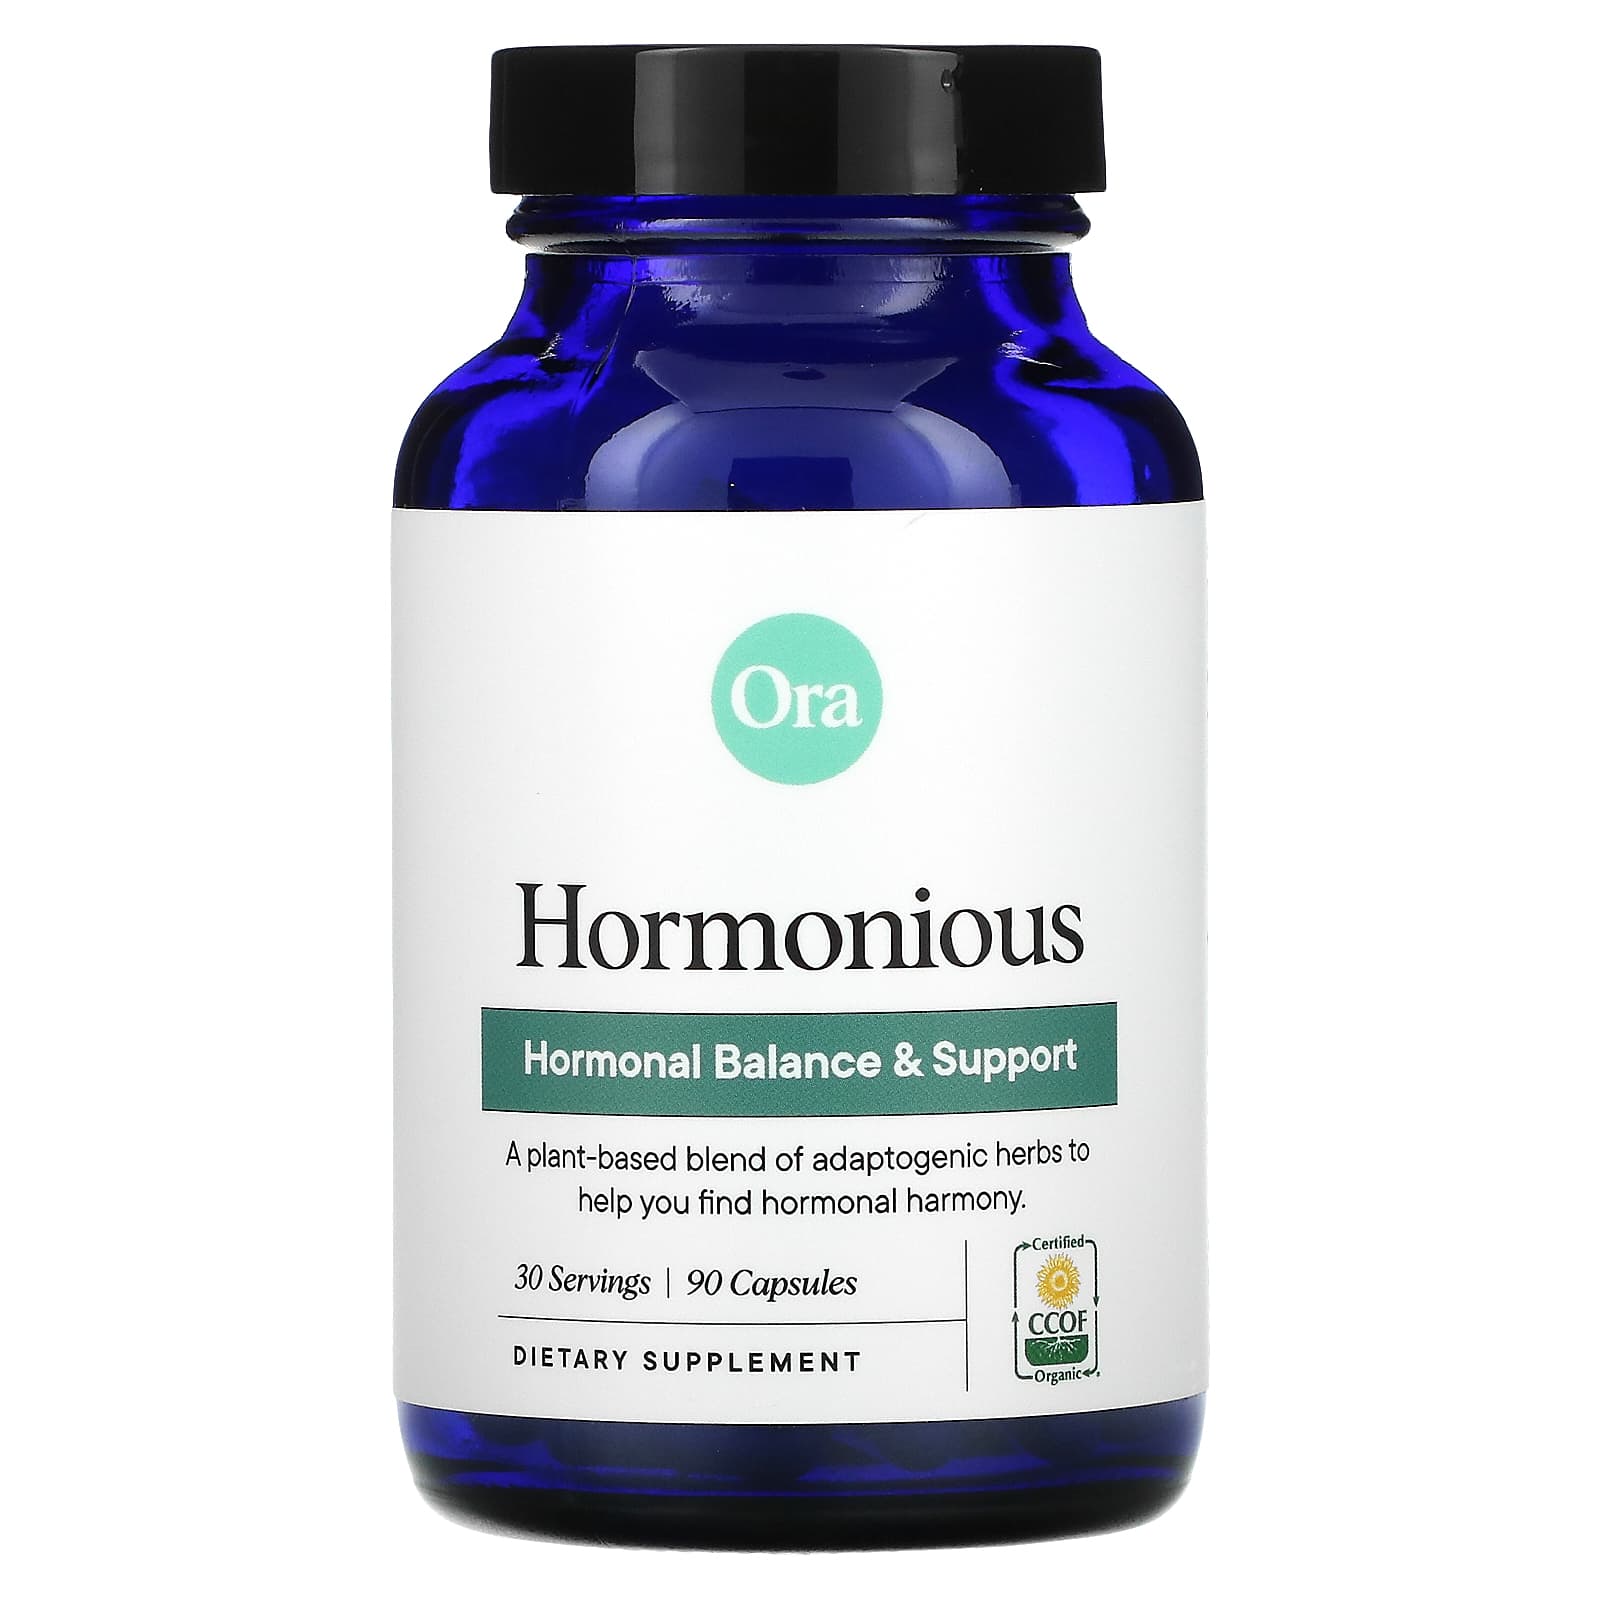 Hormone balance supplements